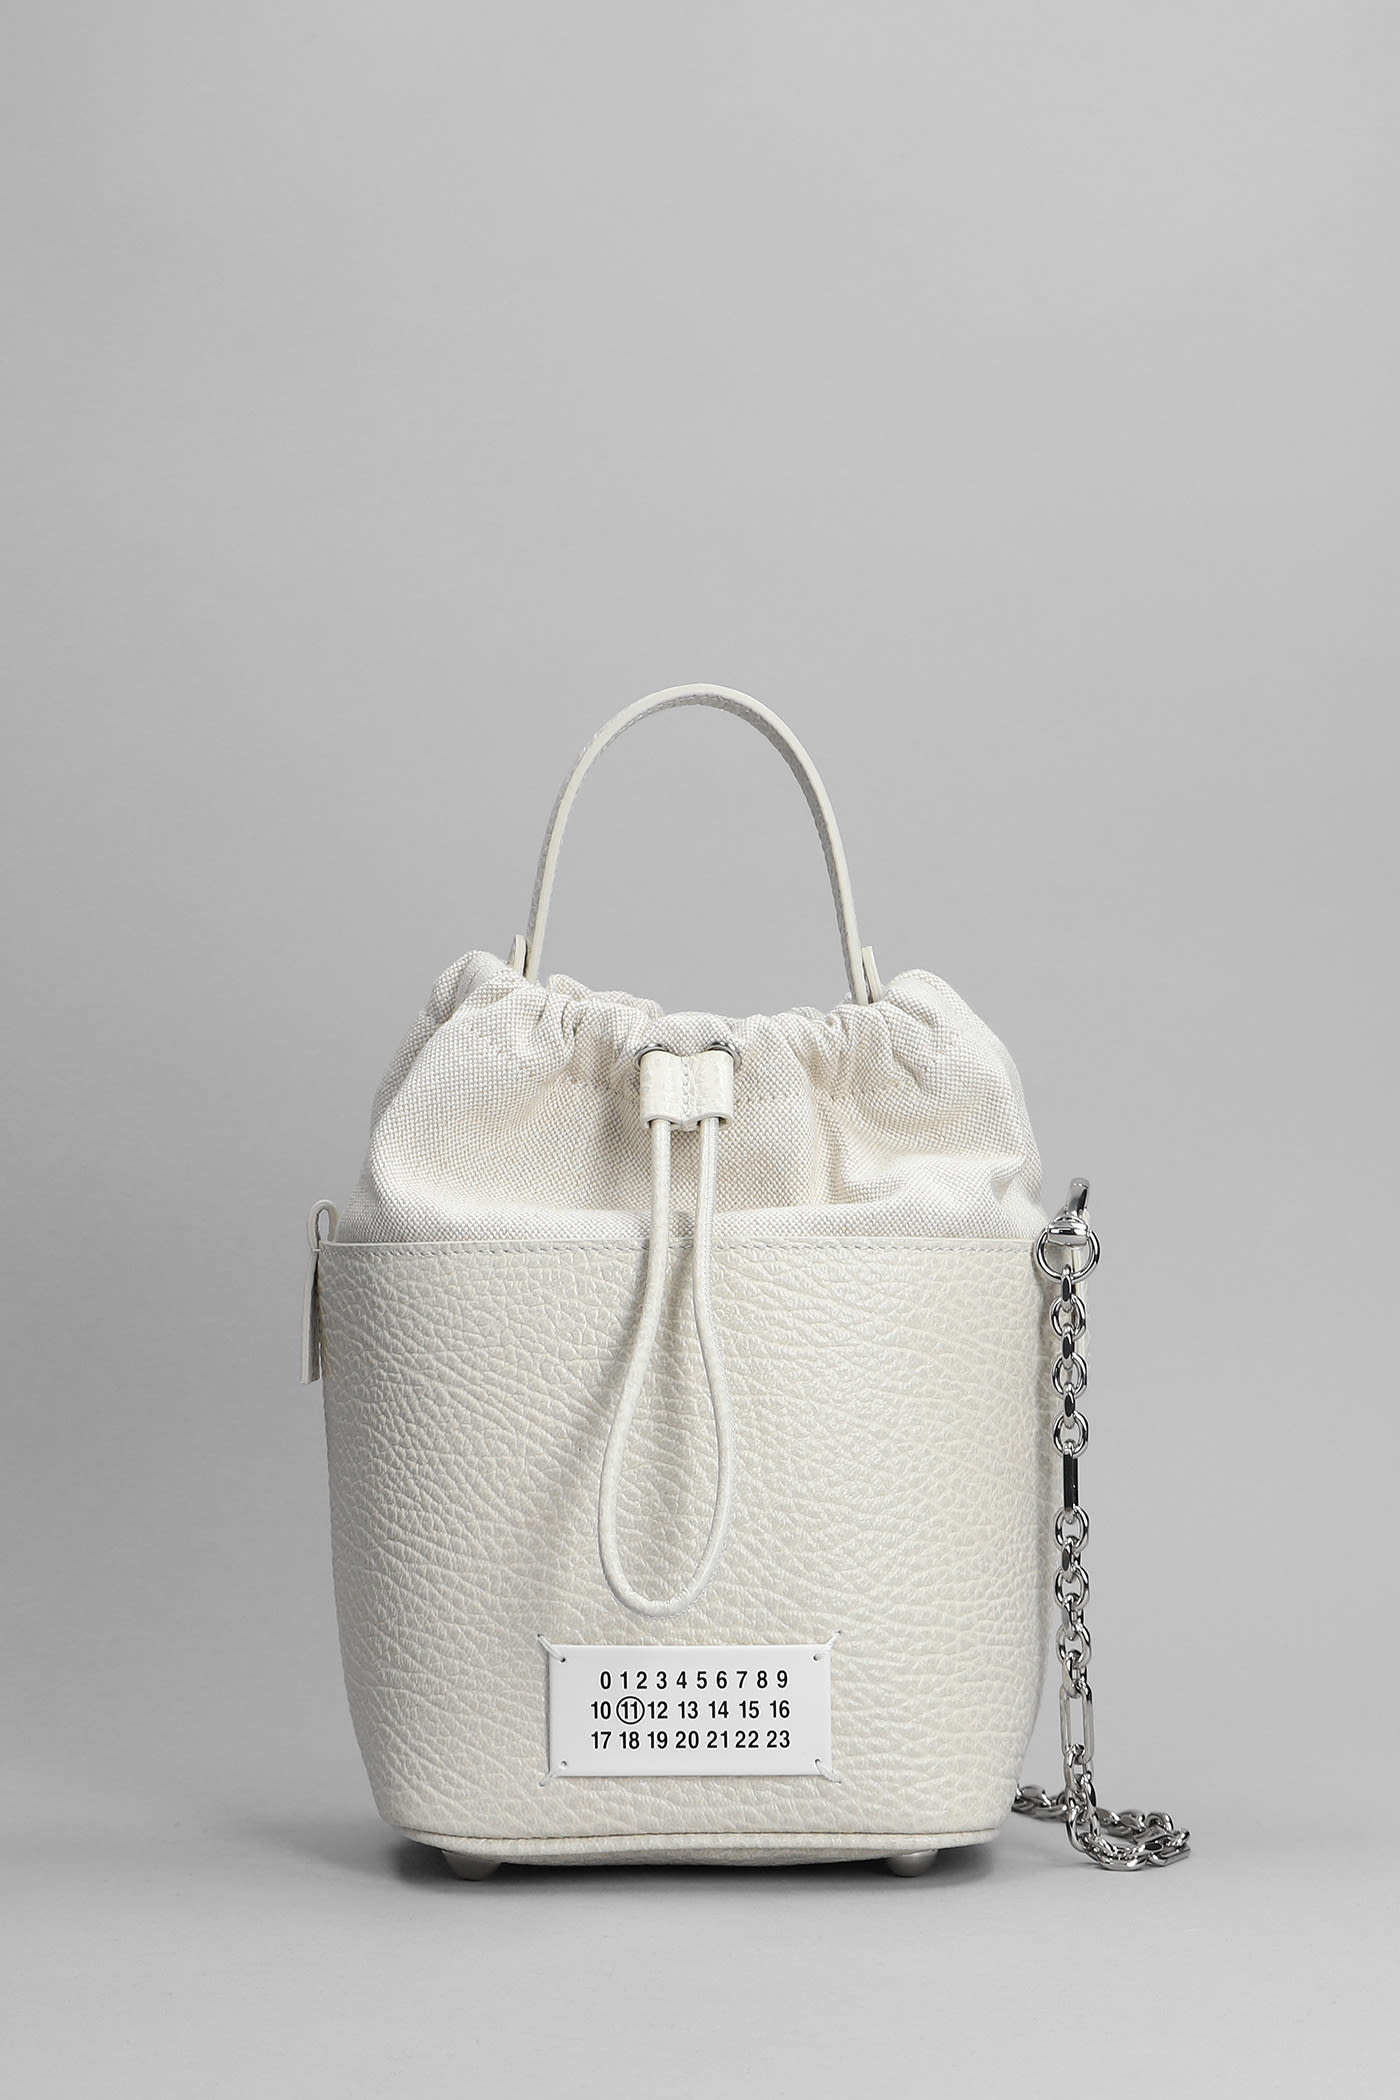 Maison Margiela Hand Bag In White Leather